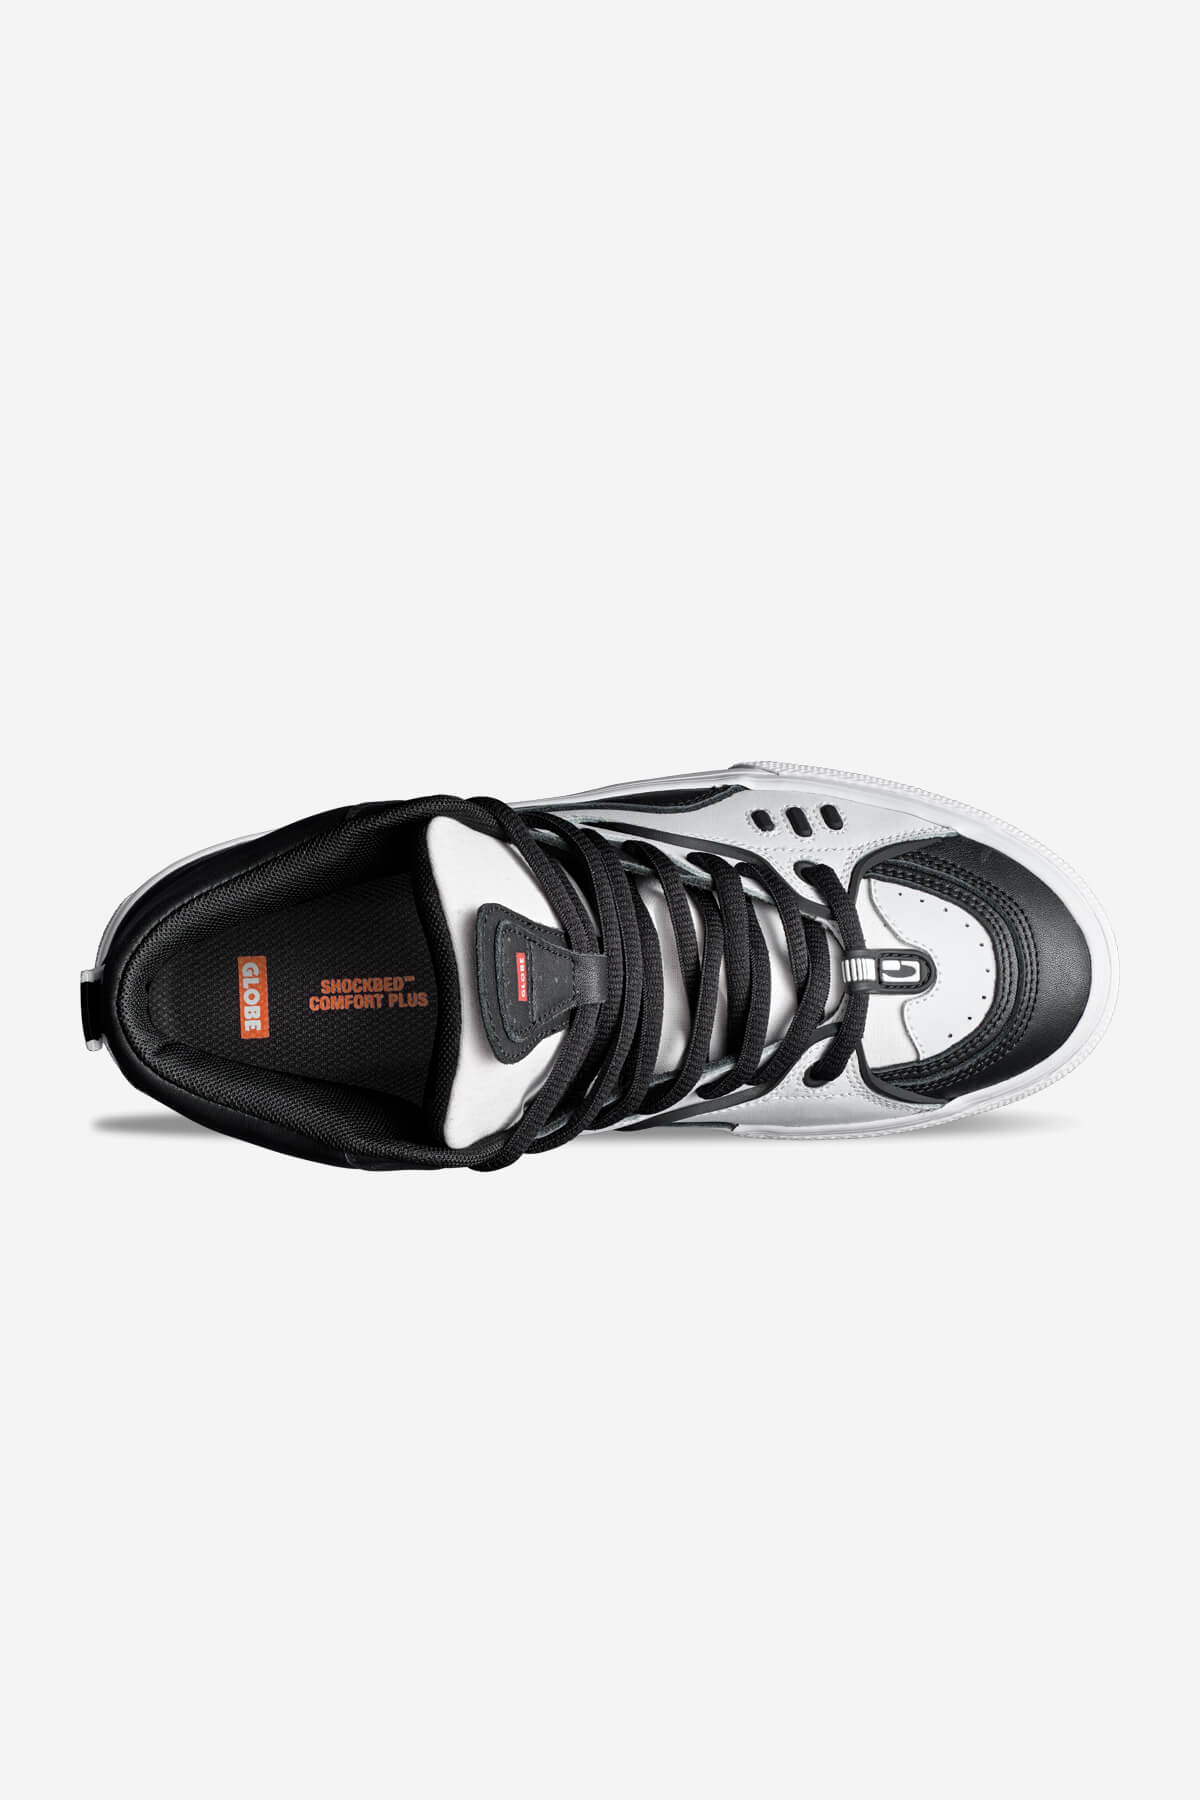 dimension black white skate shoes